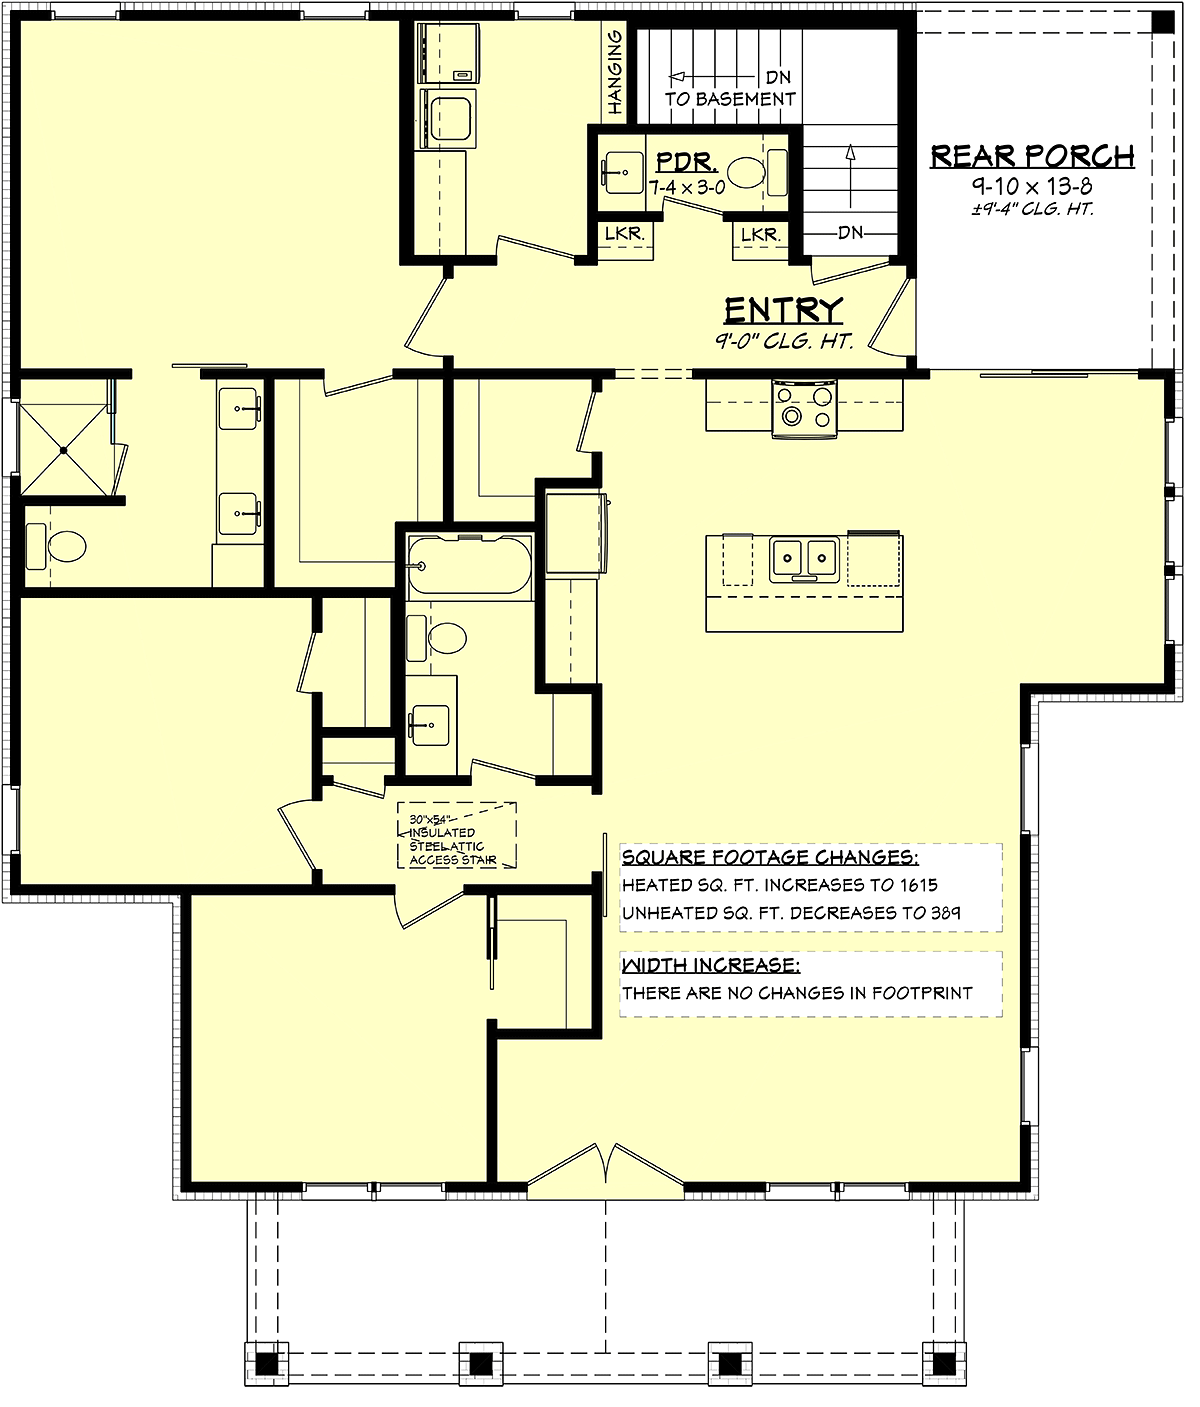 House Plan 80898 Alternate Level One